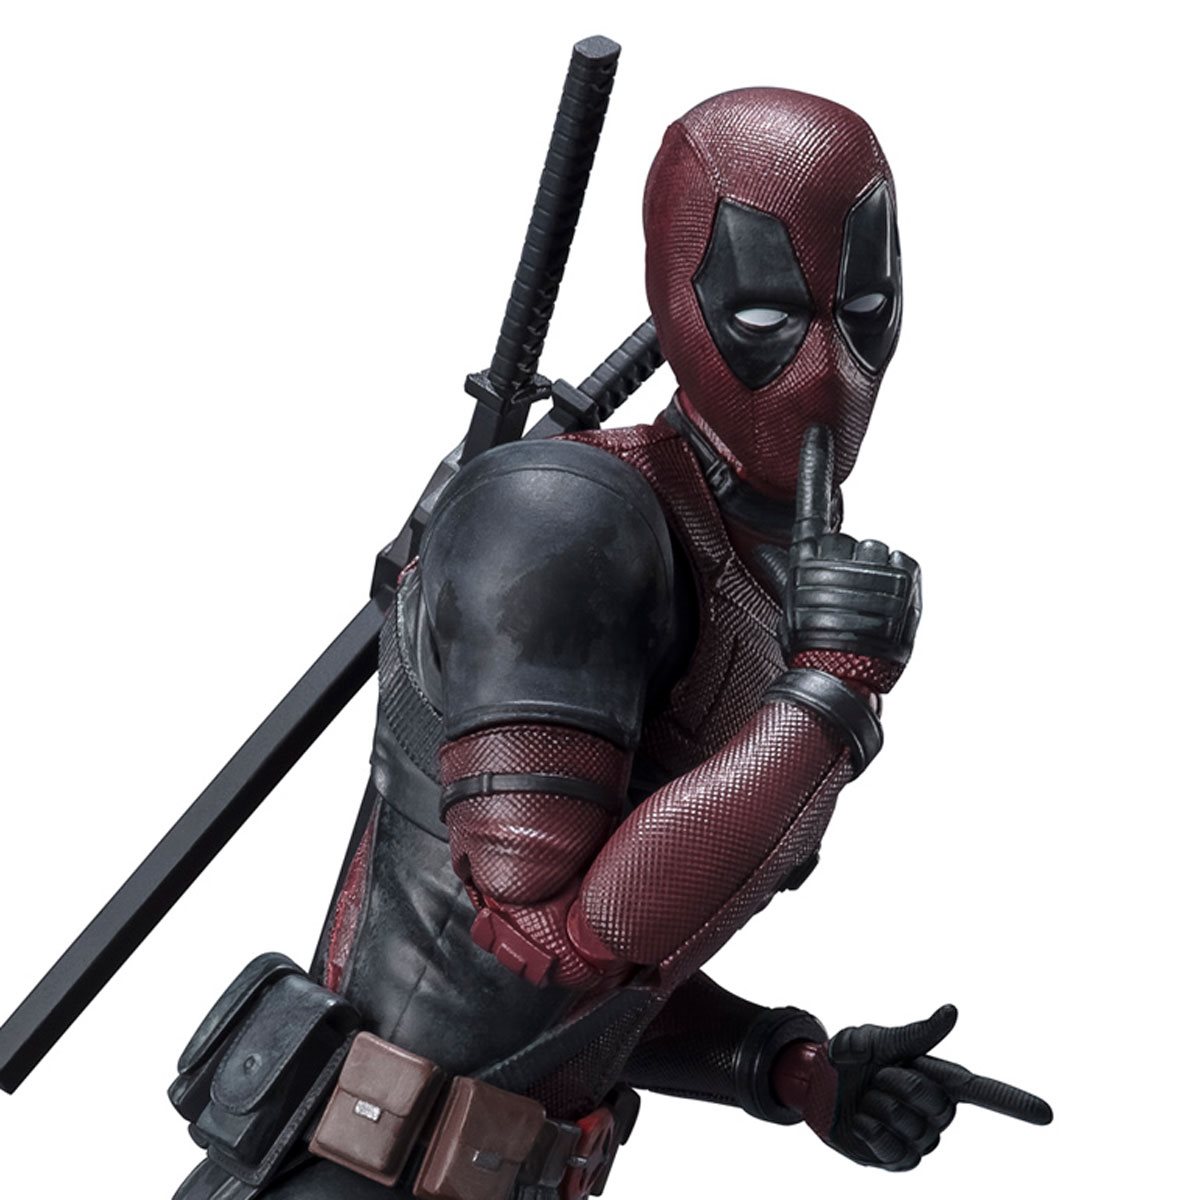 Bandai: Marvel - Deadpool 2 Deadpool S.H. Figuarts Actionfigur